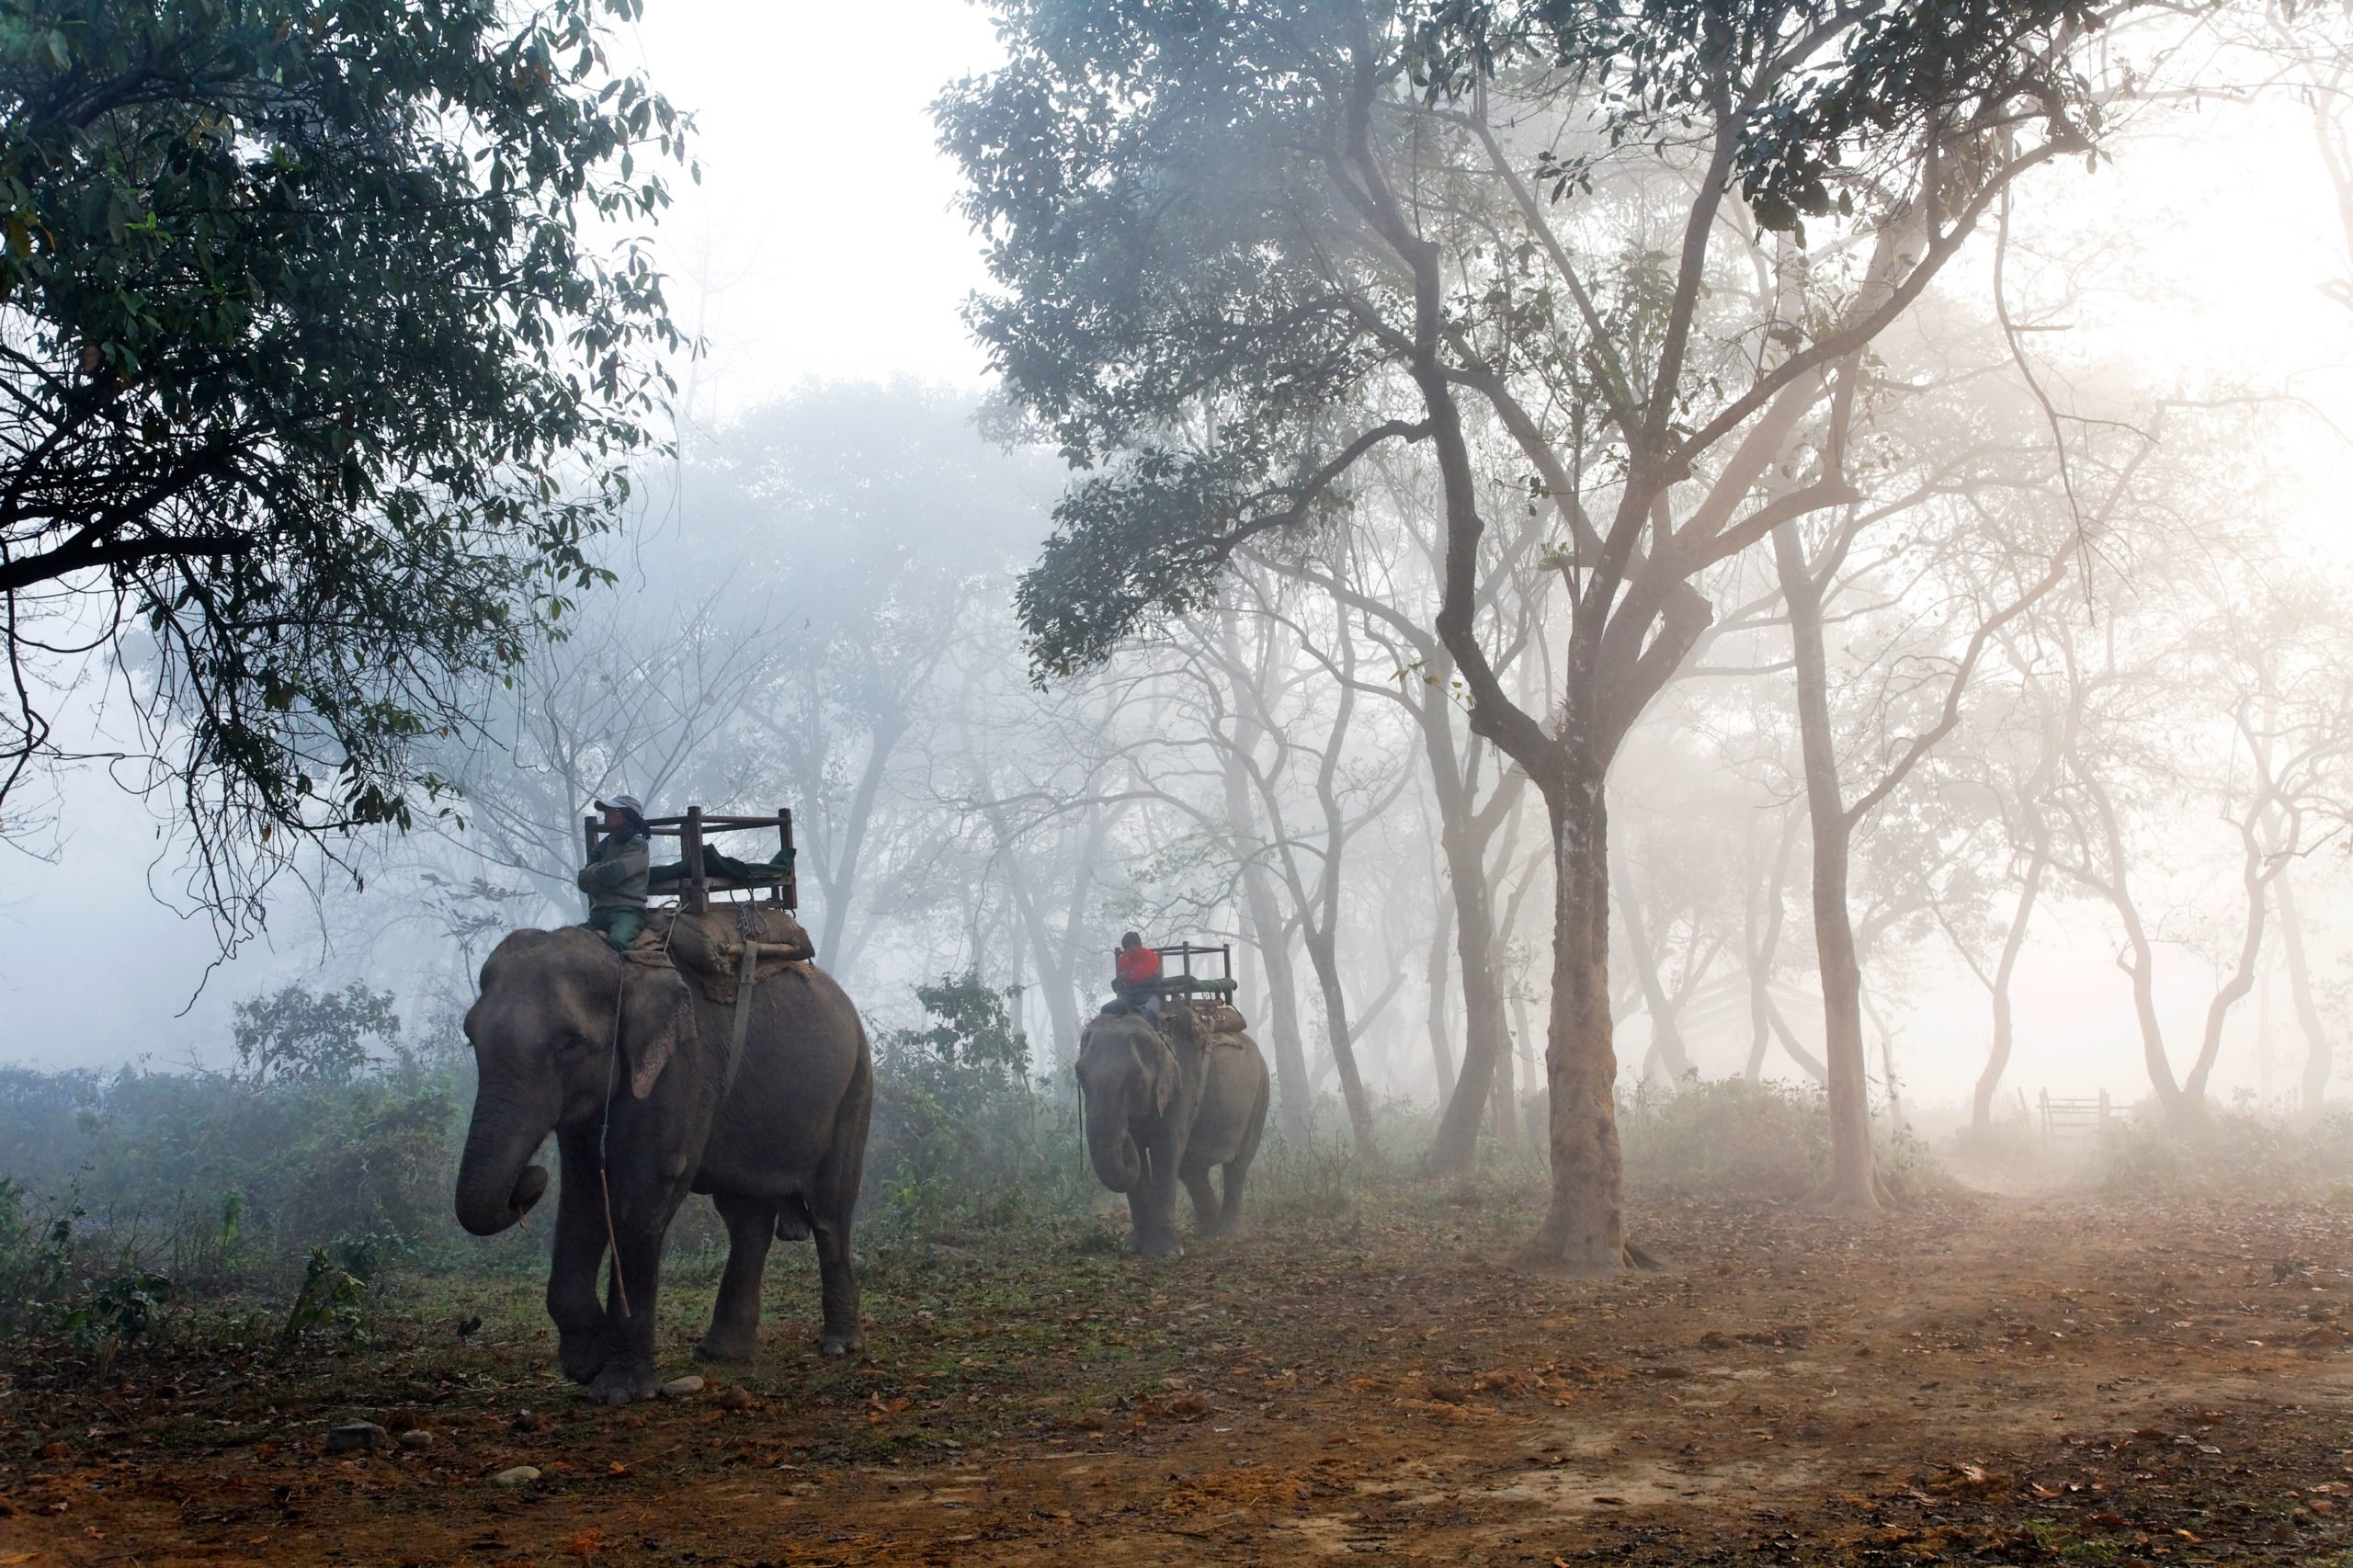 Nepal - Chitwan National Park - safari on elephant back